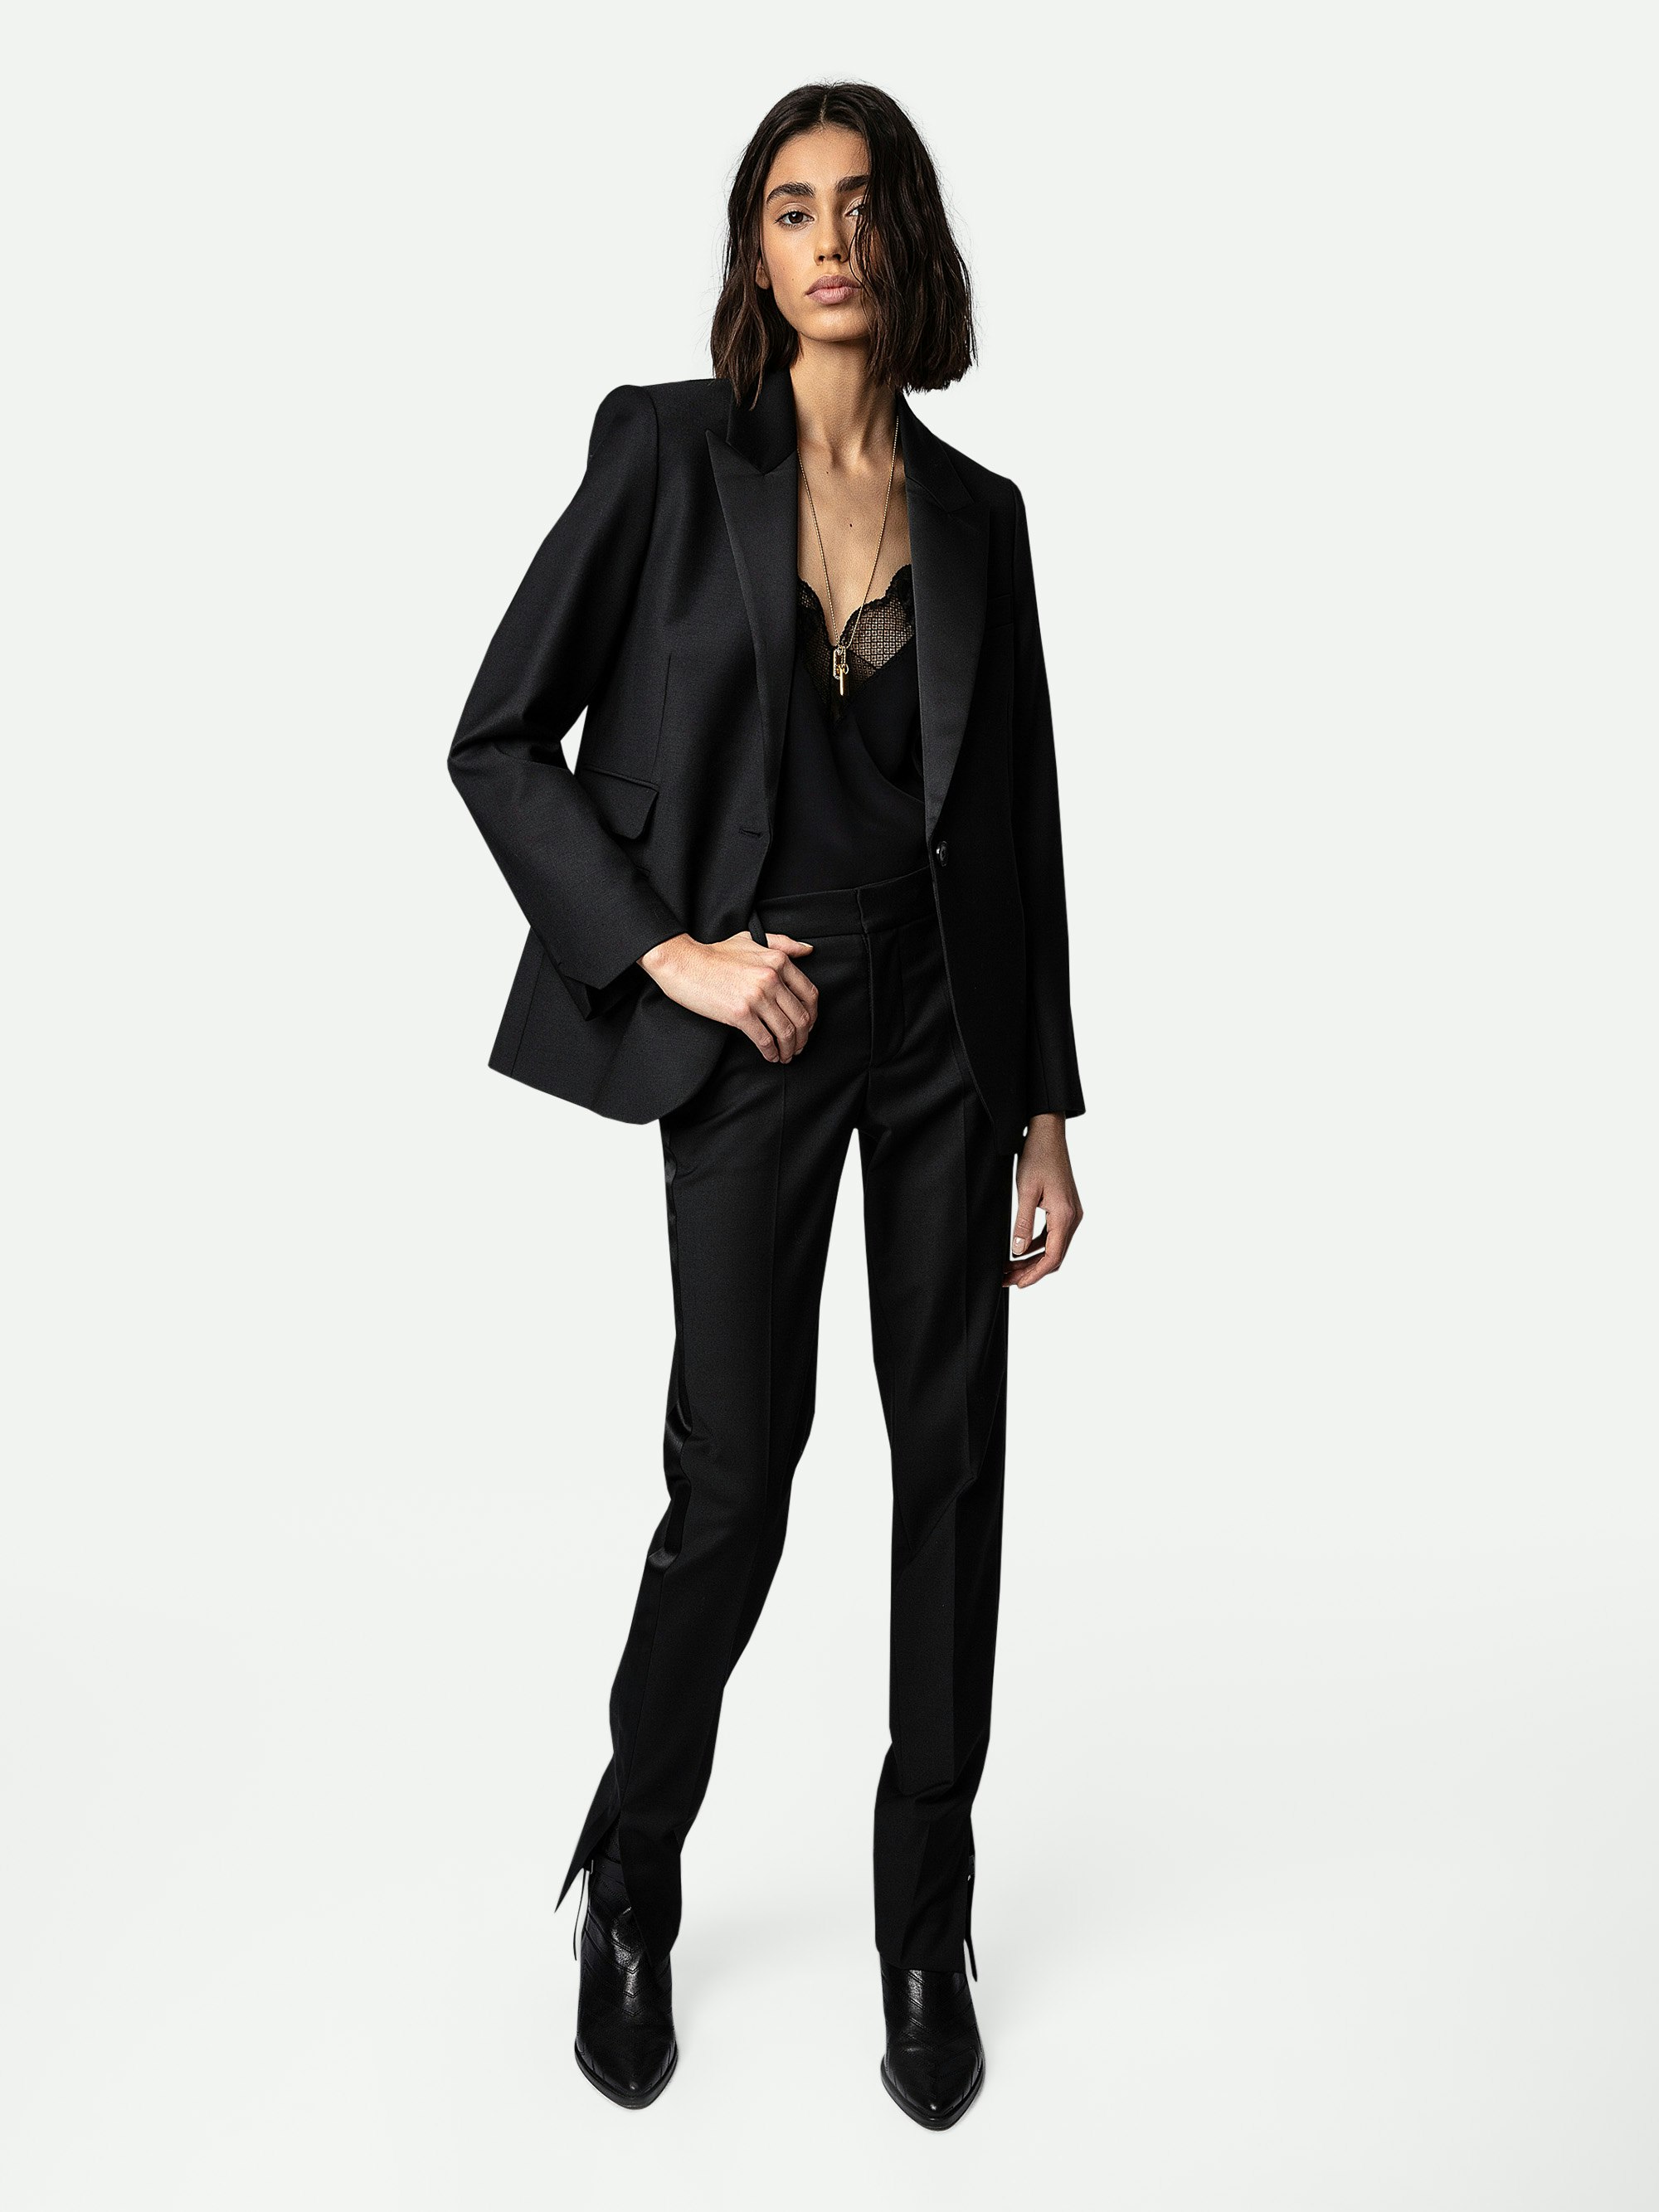 Venus Blazer - Women’s slightly oversized black blazer with pockets